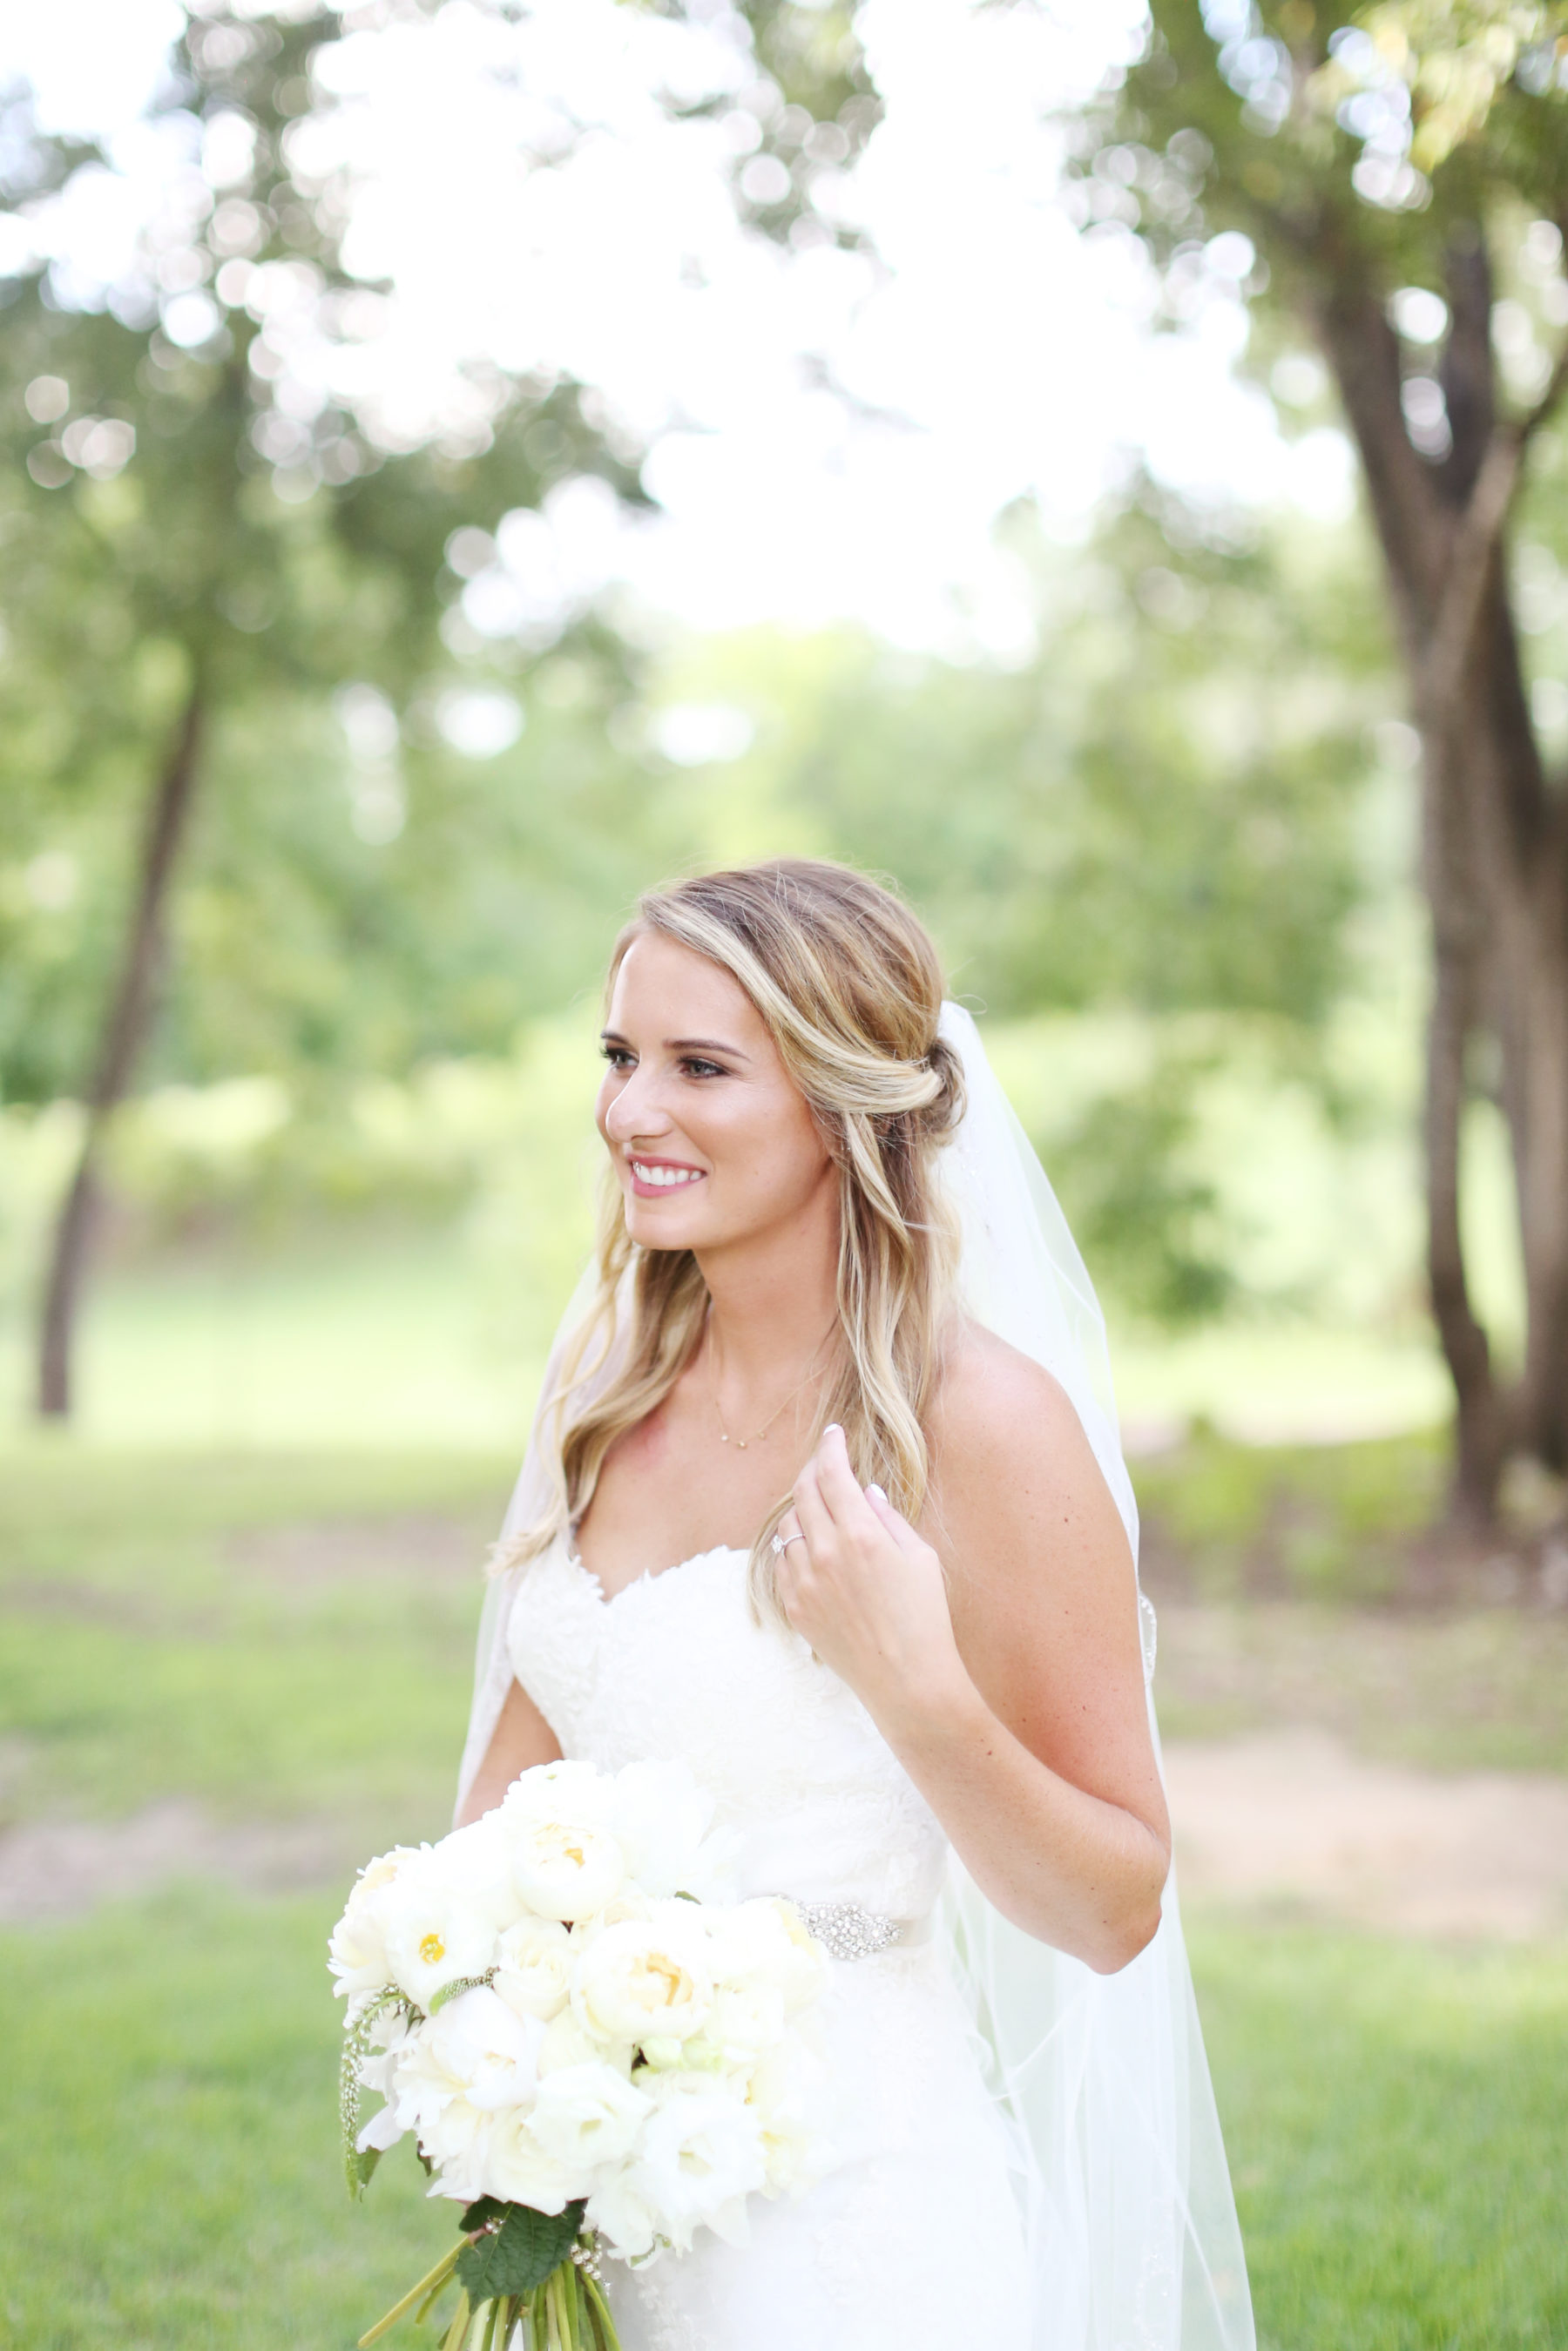 Oxford Mississippi Wedding featured on Nashville Bride Guide